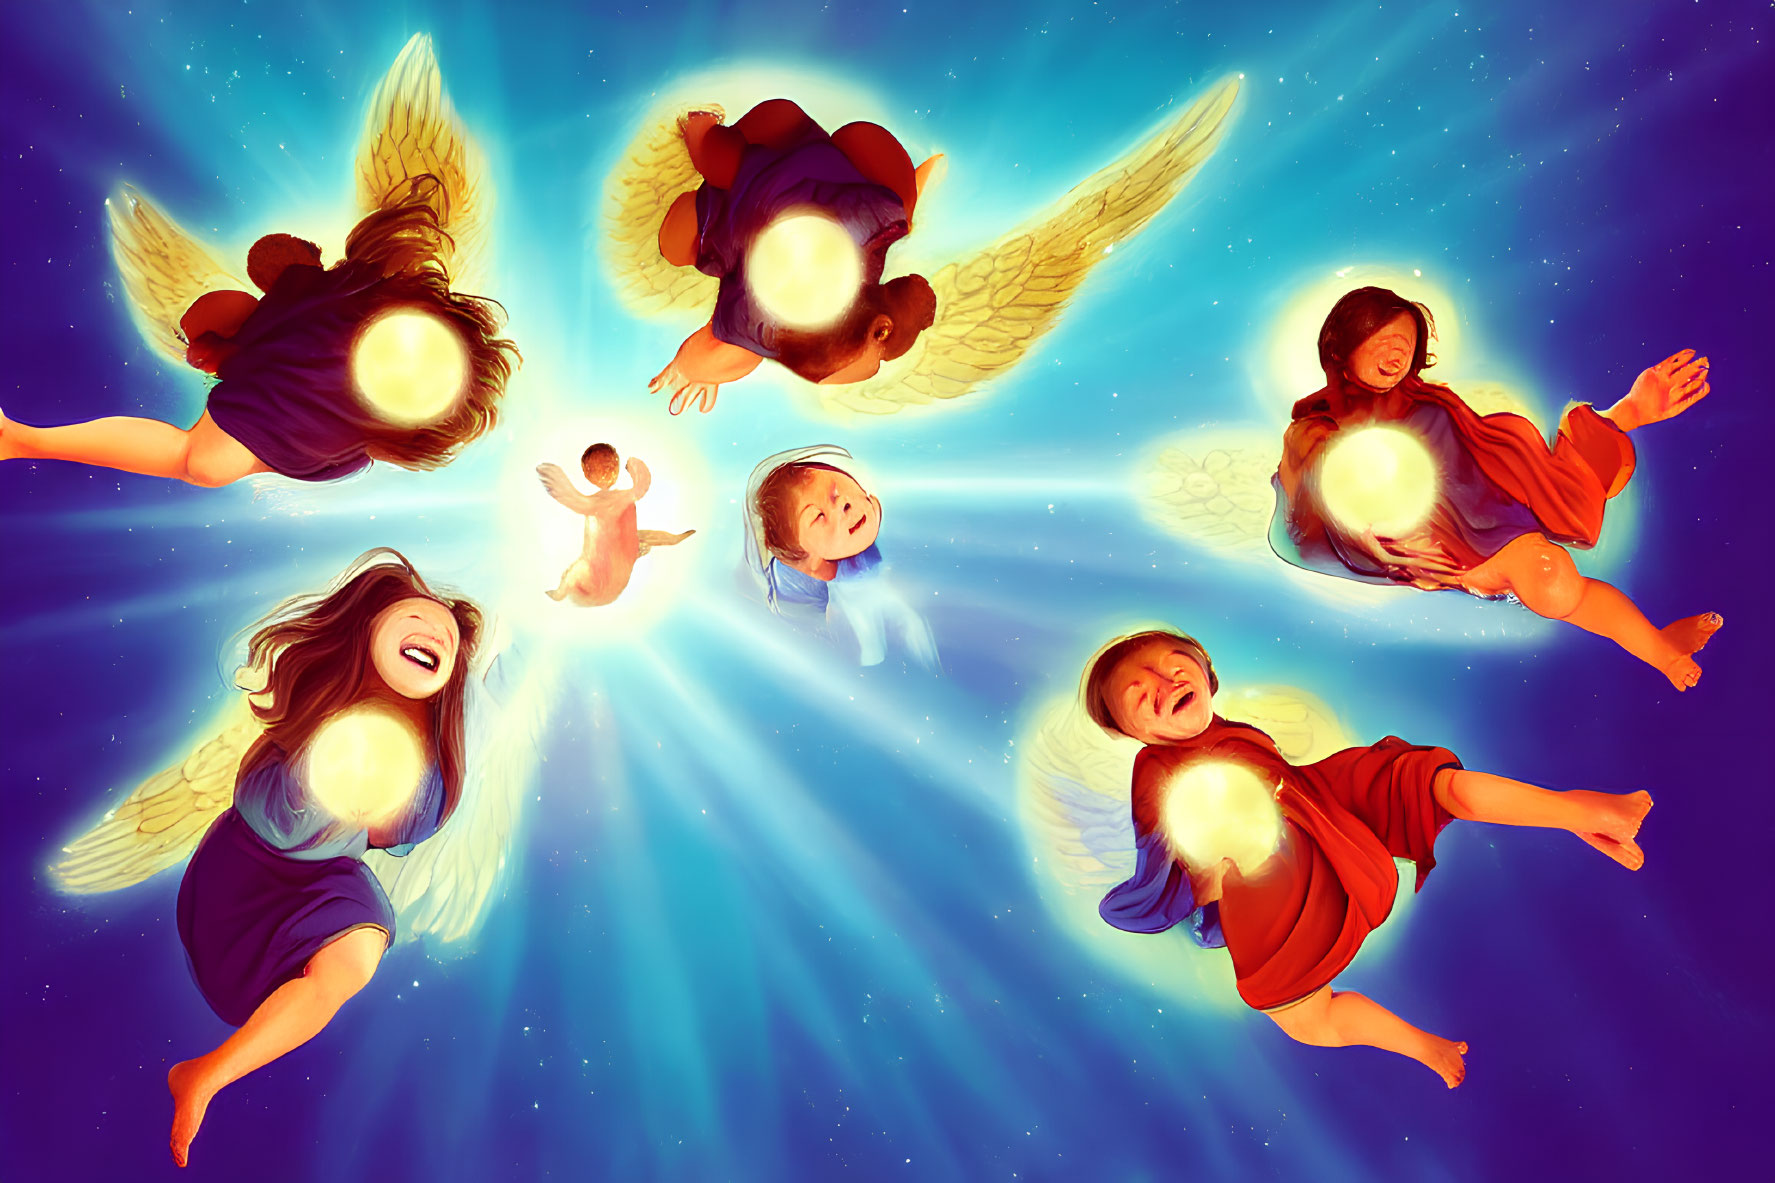 Joyful angels with glowing halos in heavenly setting: a radiant portrayal.